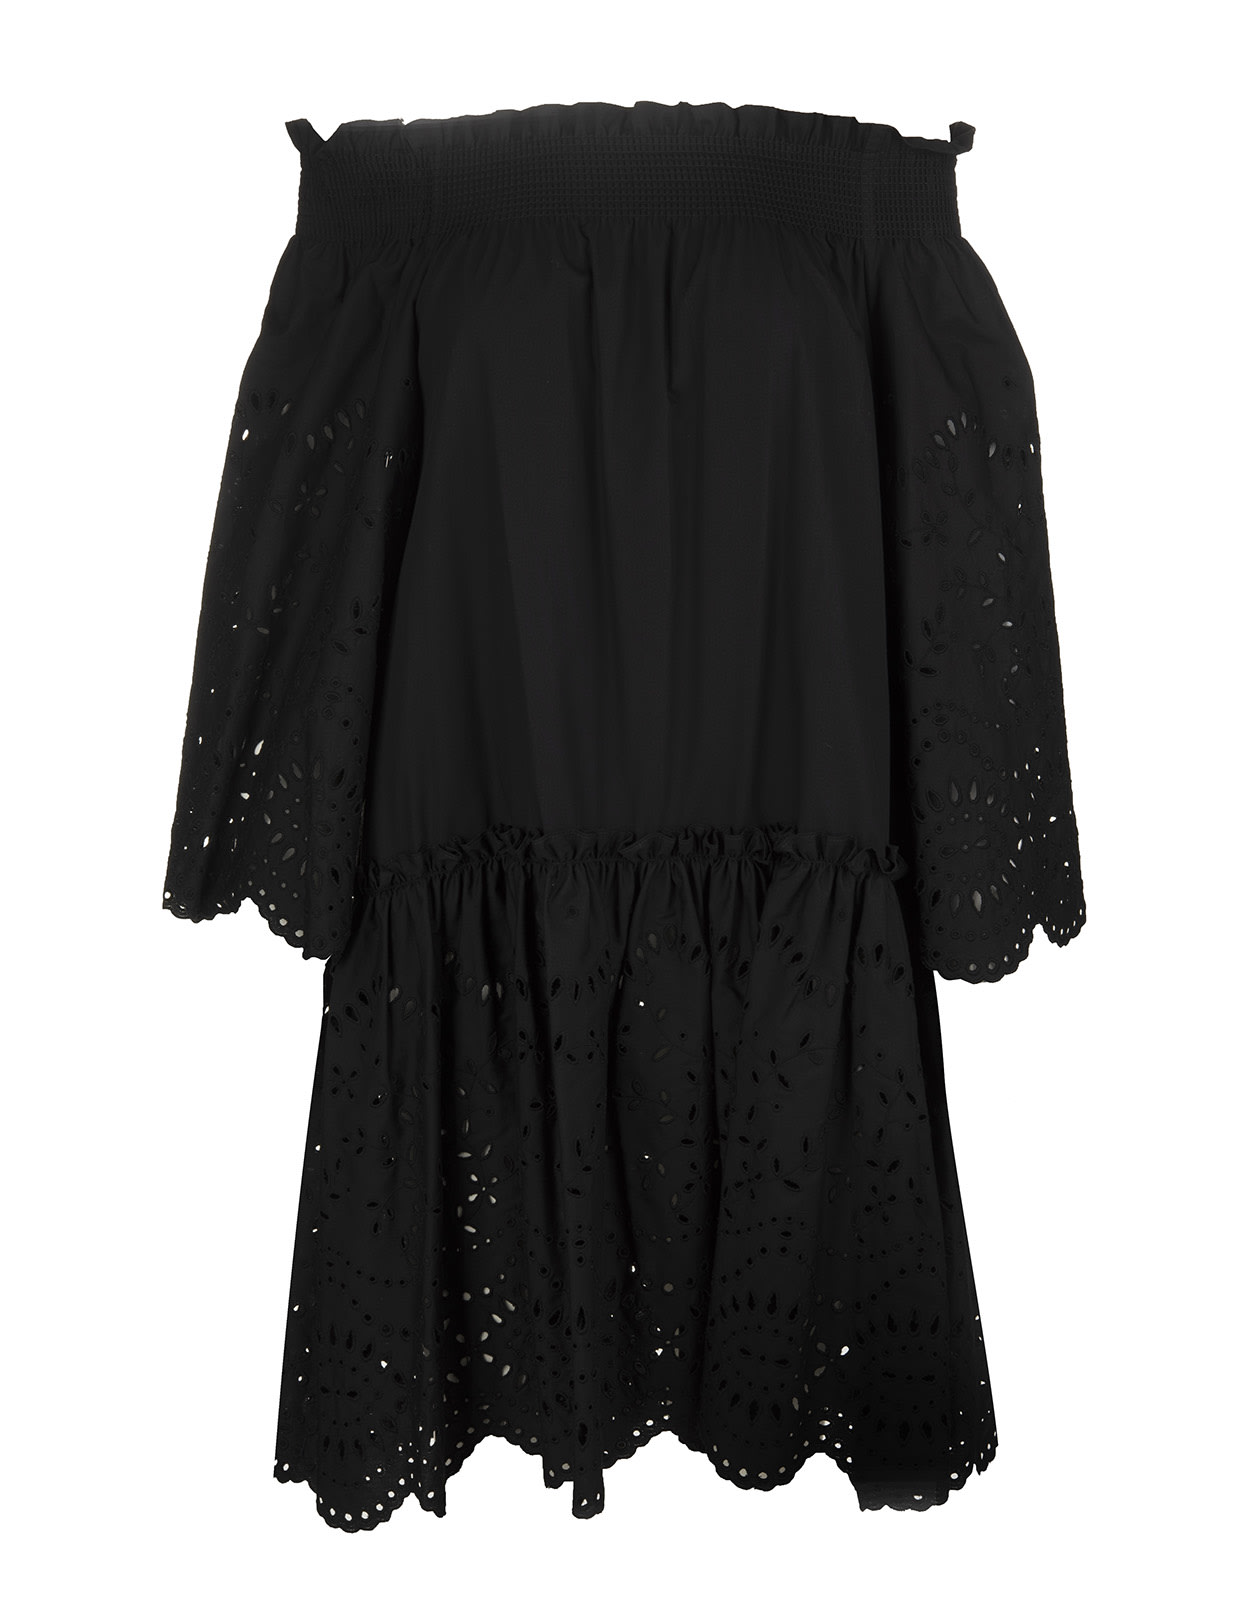 Parosh Short Black Dress With Open Shoulders